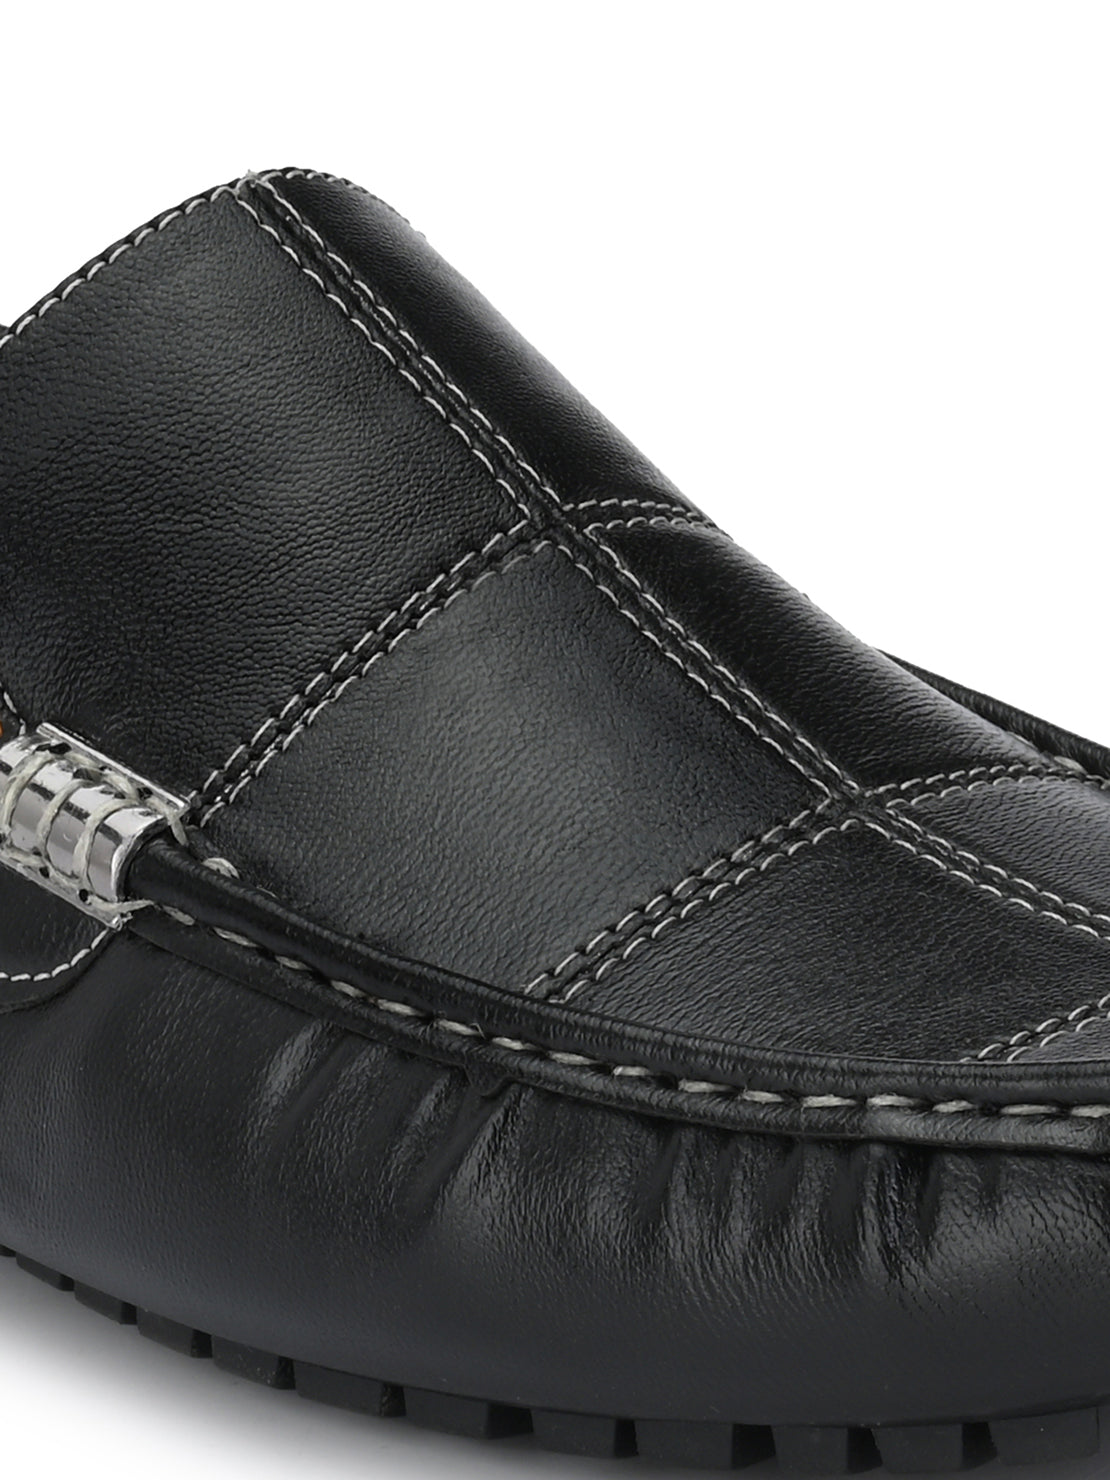 Guava Men's Black Stylish Slip On Driving Loafers (GV15JA674)